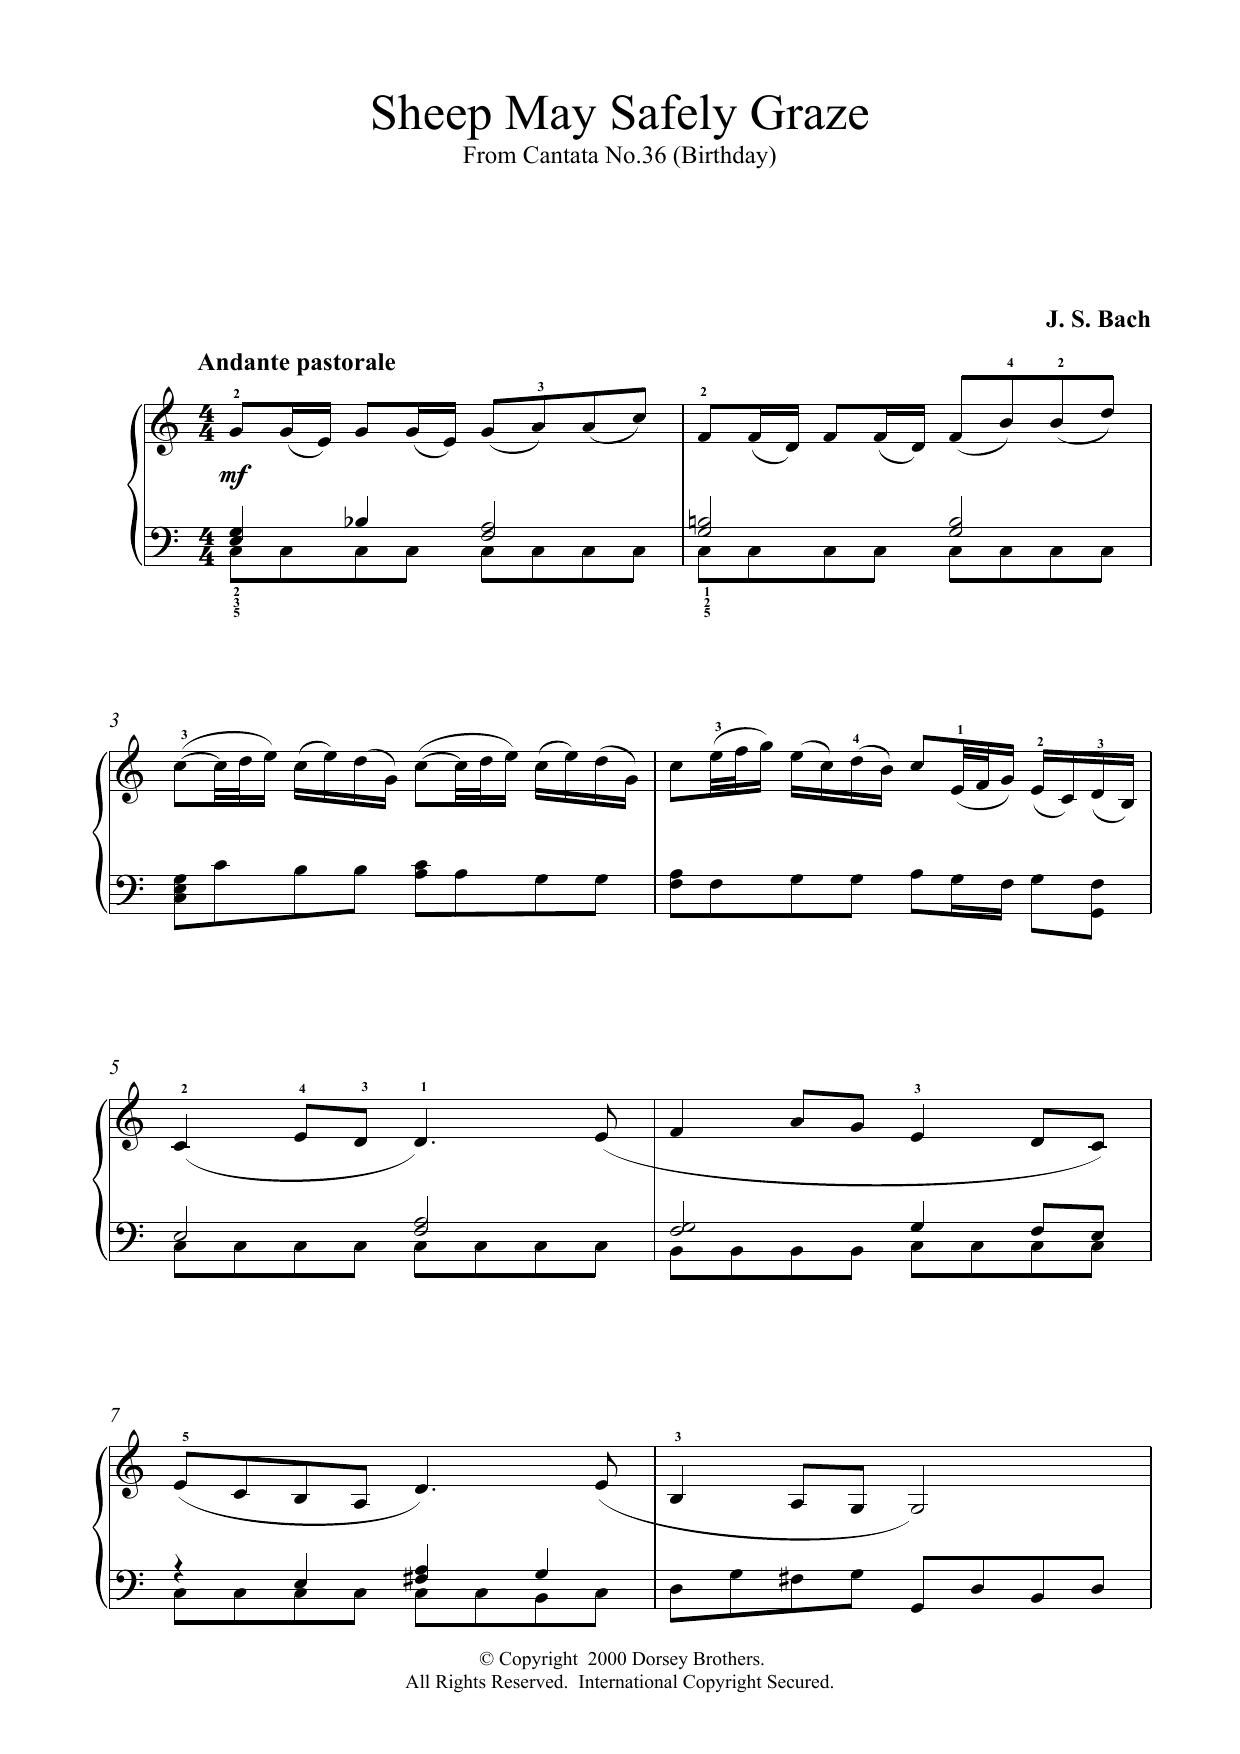 Johann Sebastian Bach Sheep May Safely Graze Sheet Music Notes & Chords for Clarinet - Download or Print PDF